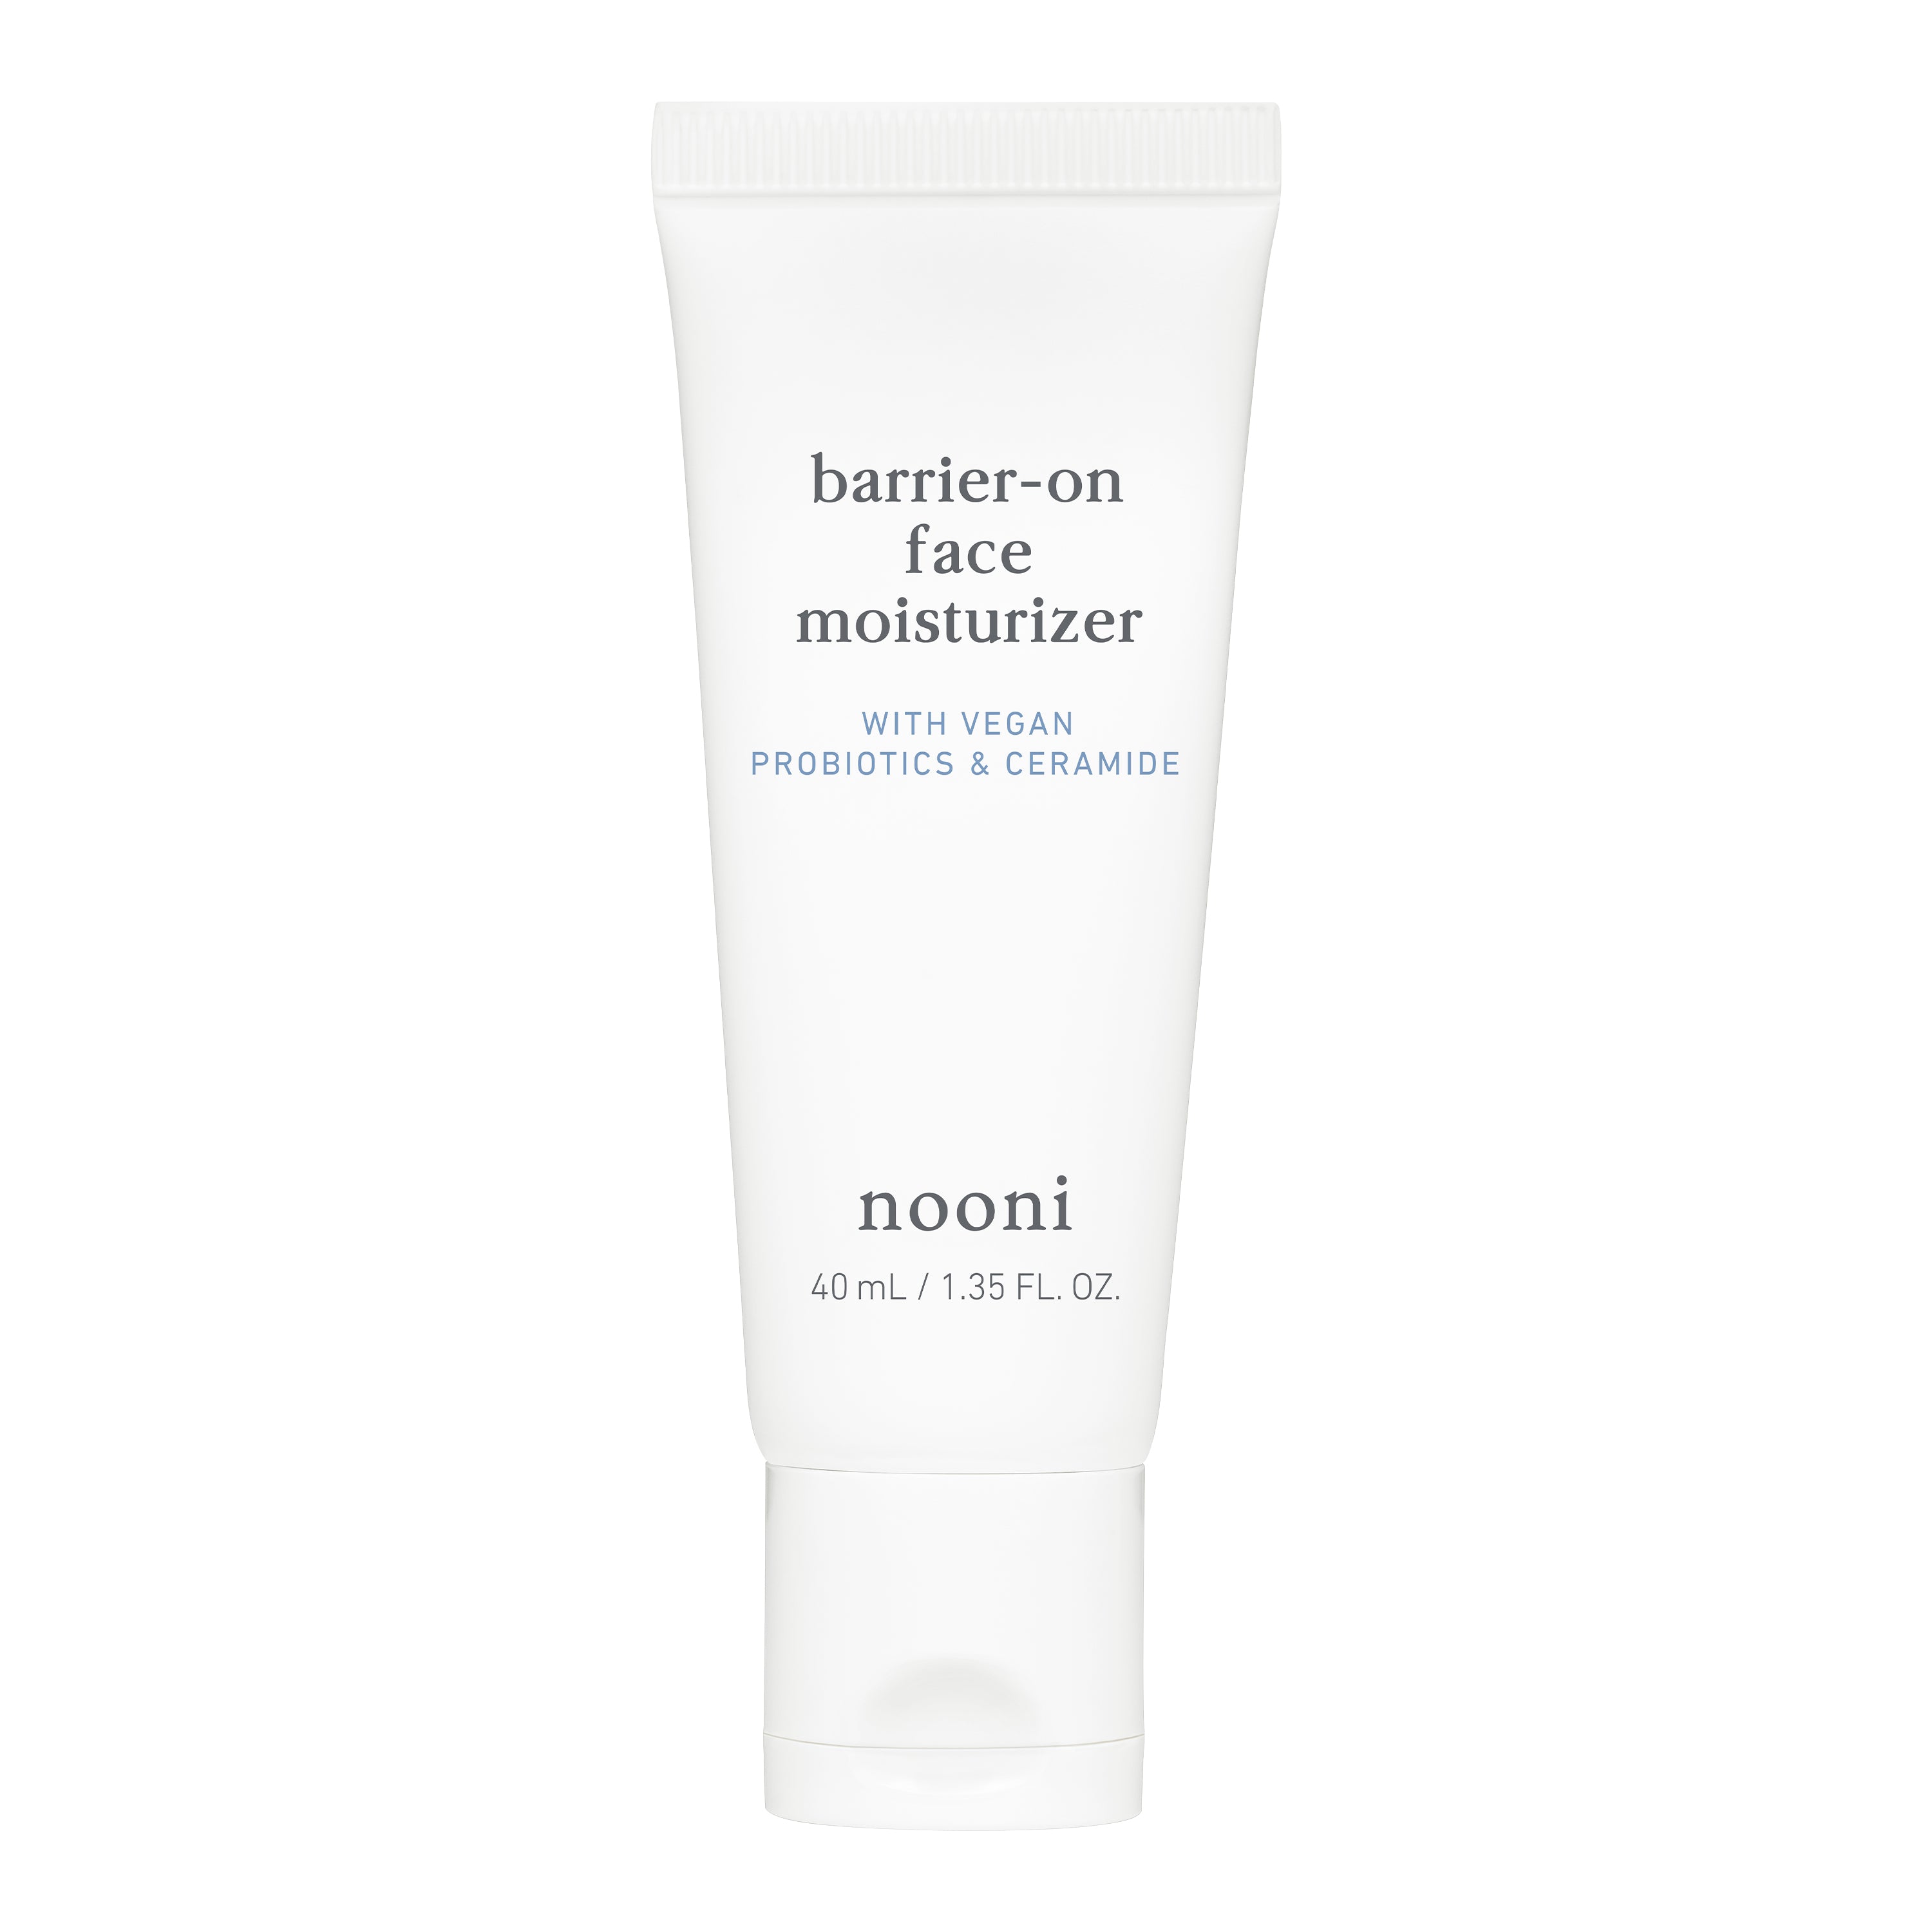 barrier-on face moisturizer